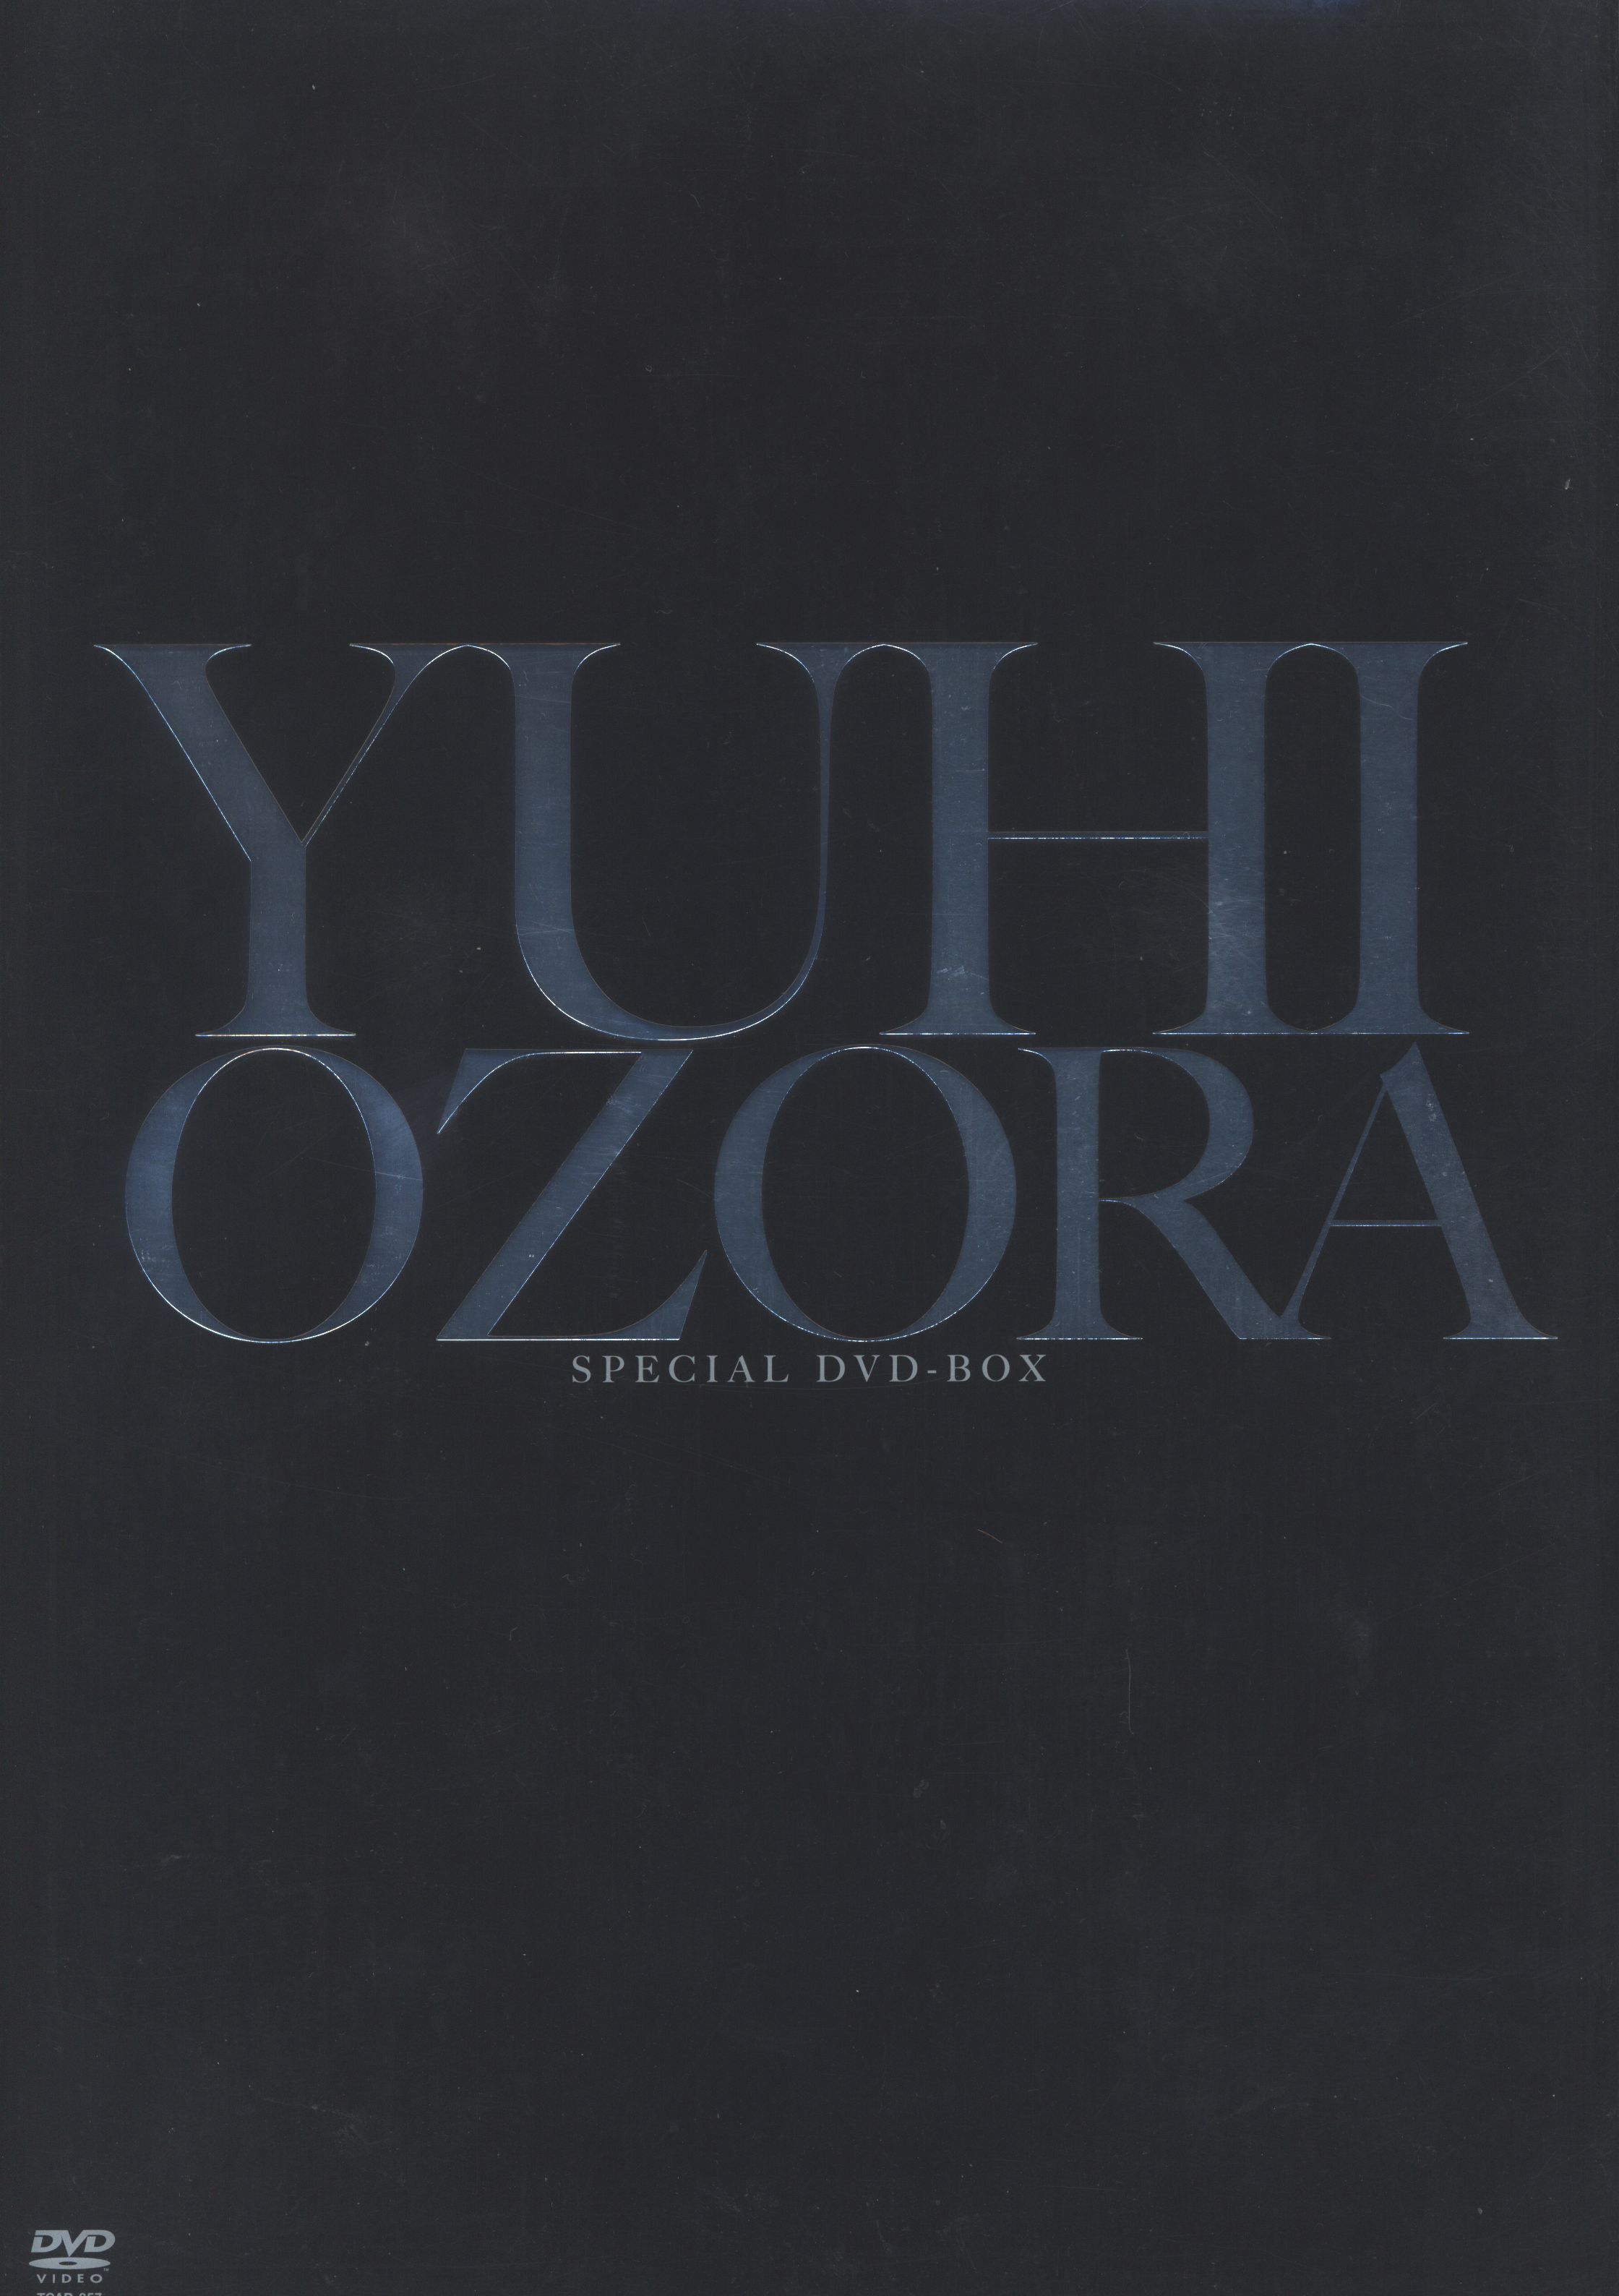 大空祐飛/Special DVD-BOX YUHI OZORA「大空祐飛」〈初…